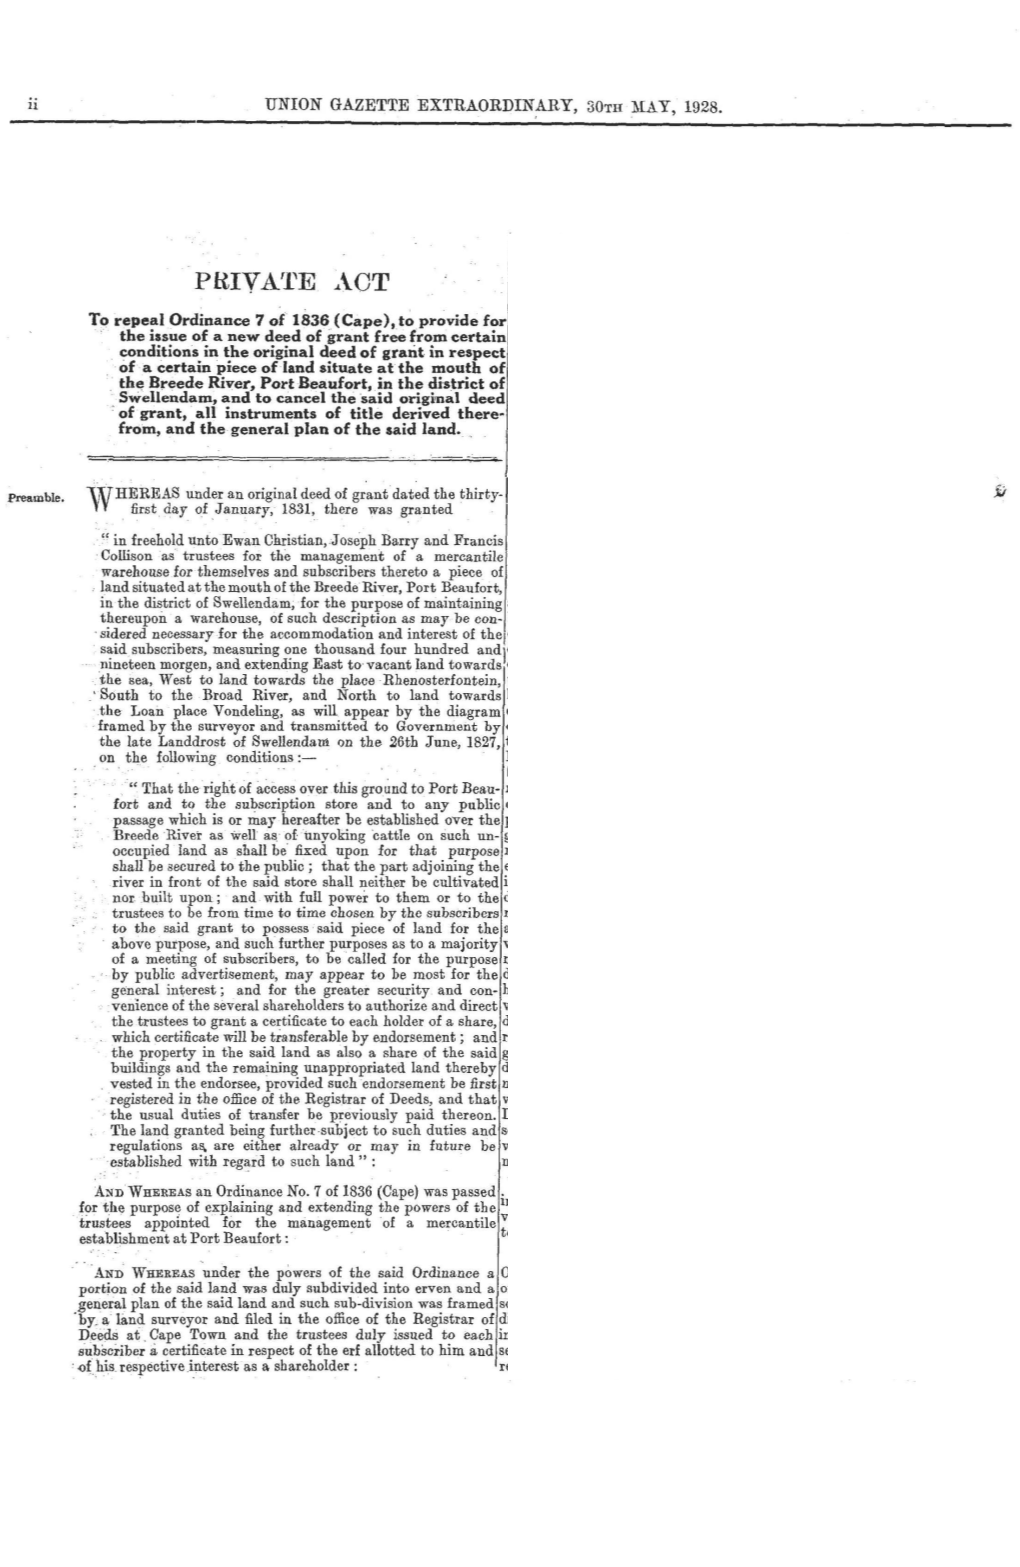 Port Beaufort Grant Amendment (Private) Act 14 of 1928